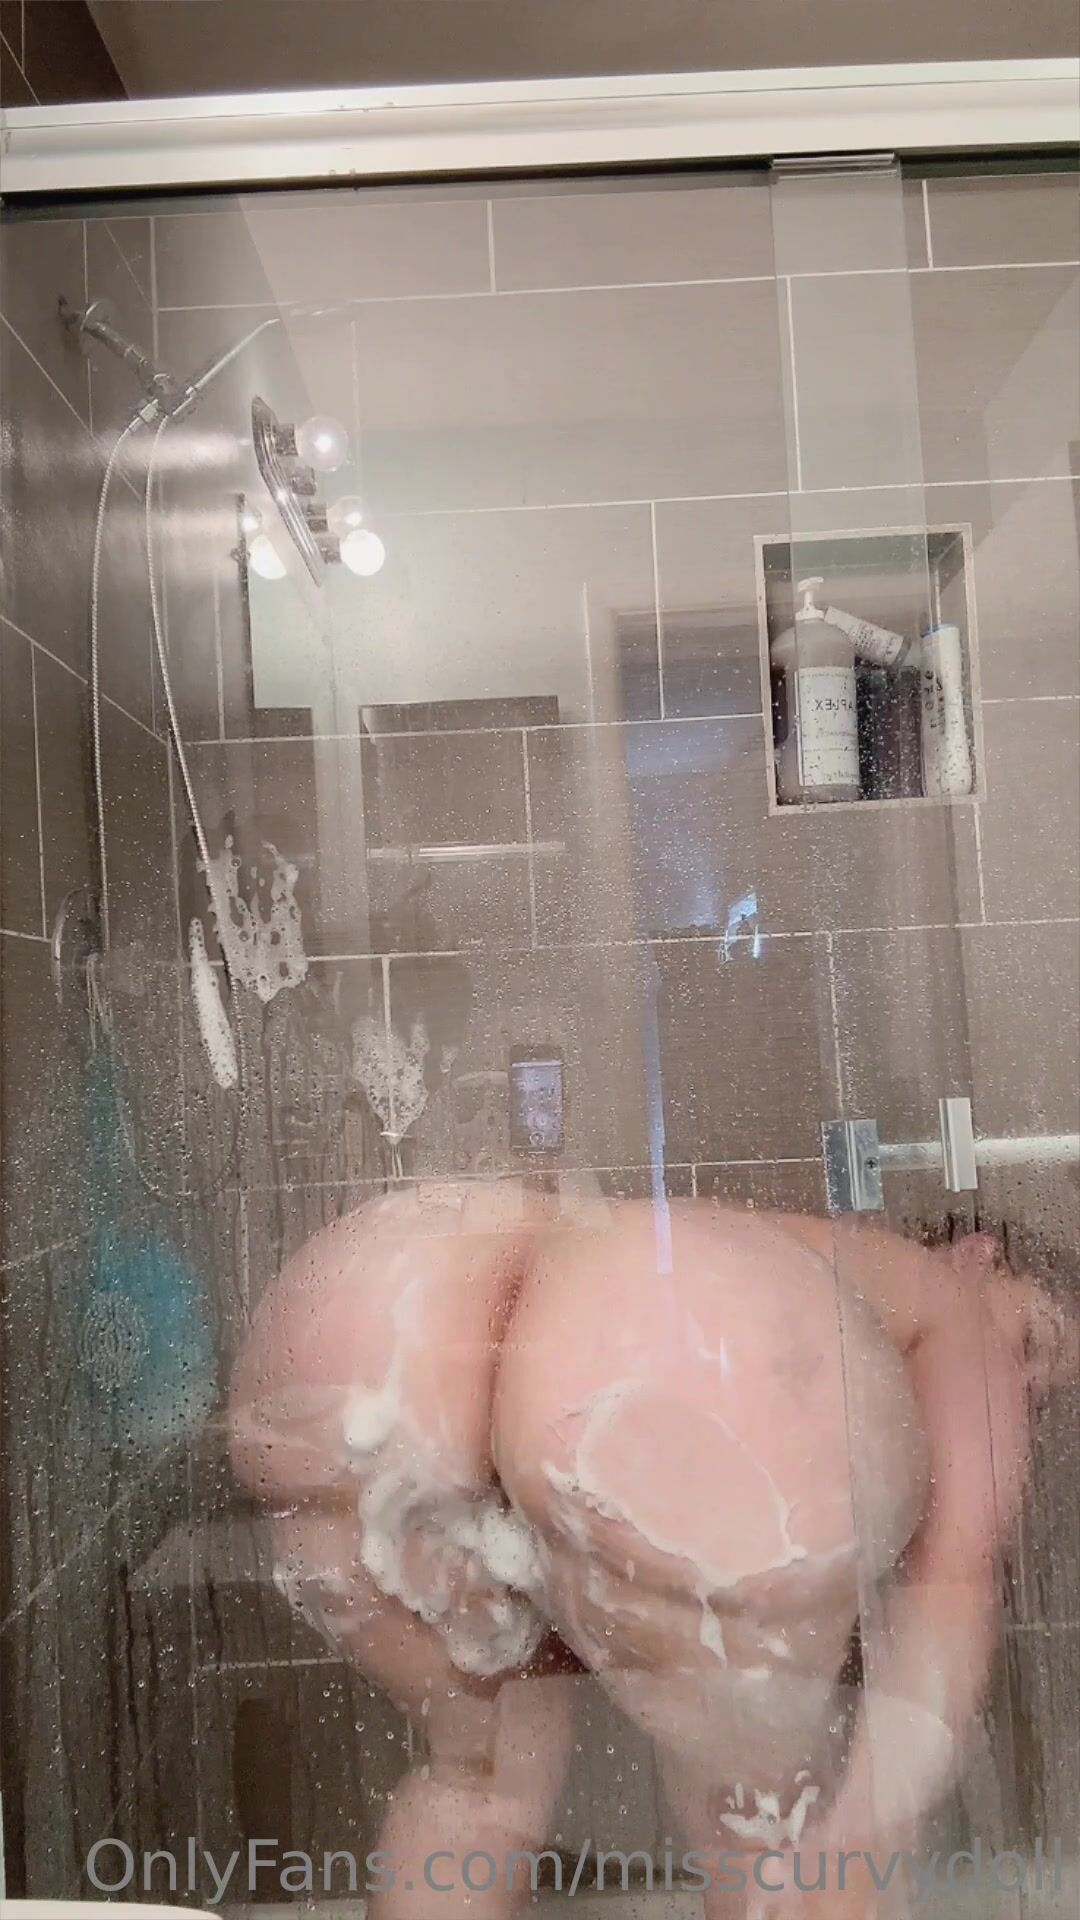 Deisy Garcia clapping ass in shower